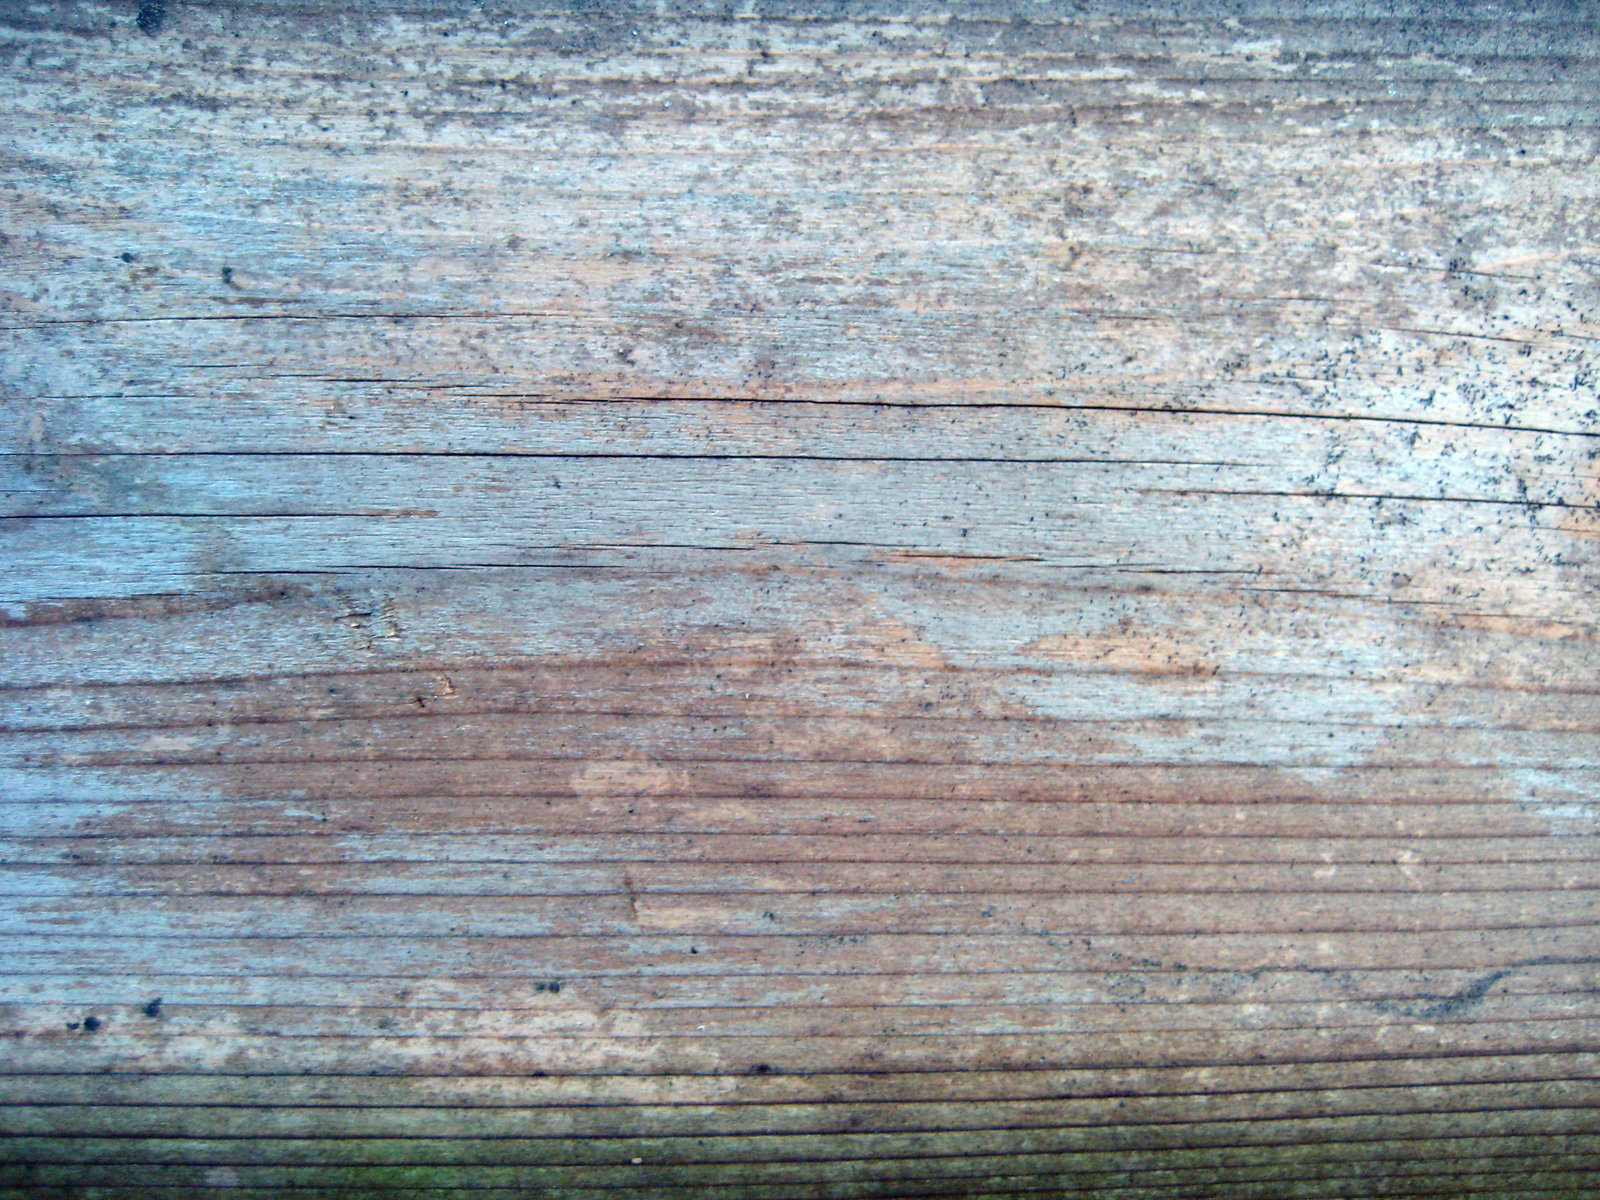 Old Wood Texture by bozoartist on DeviantArt